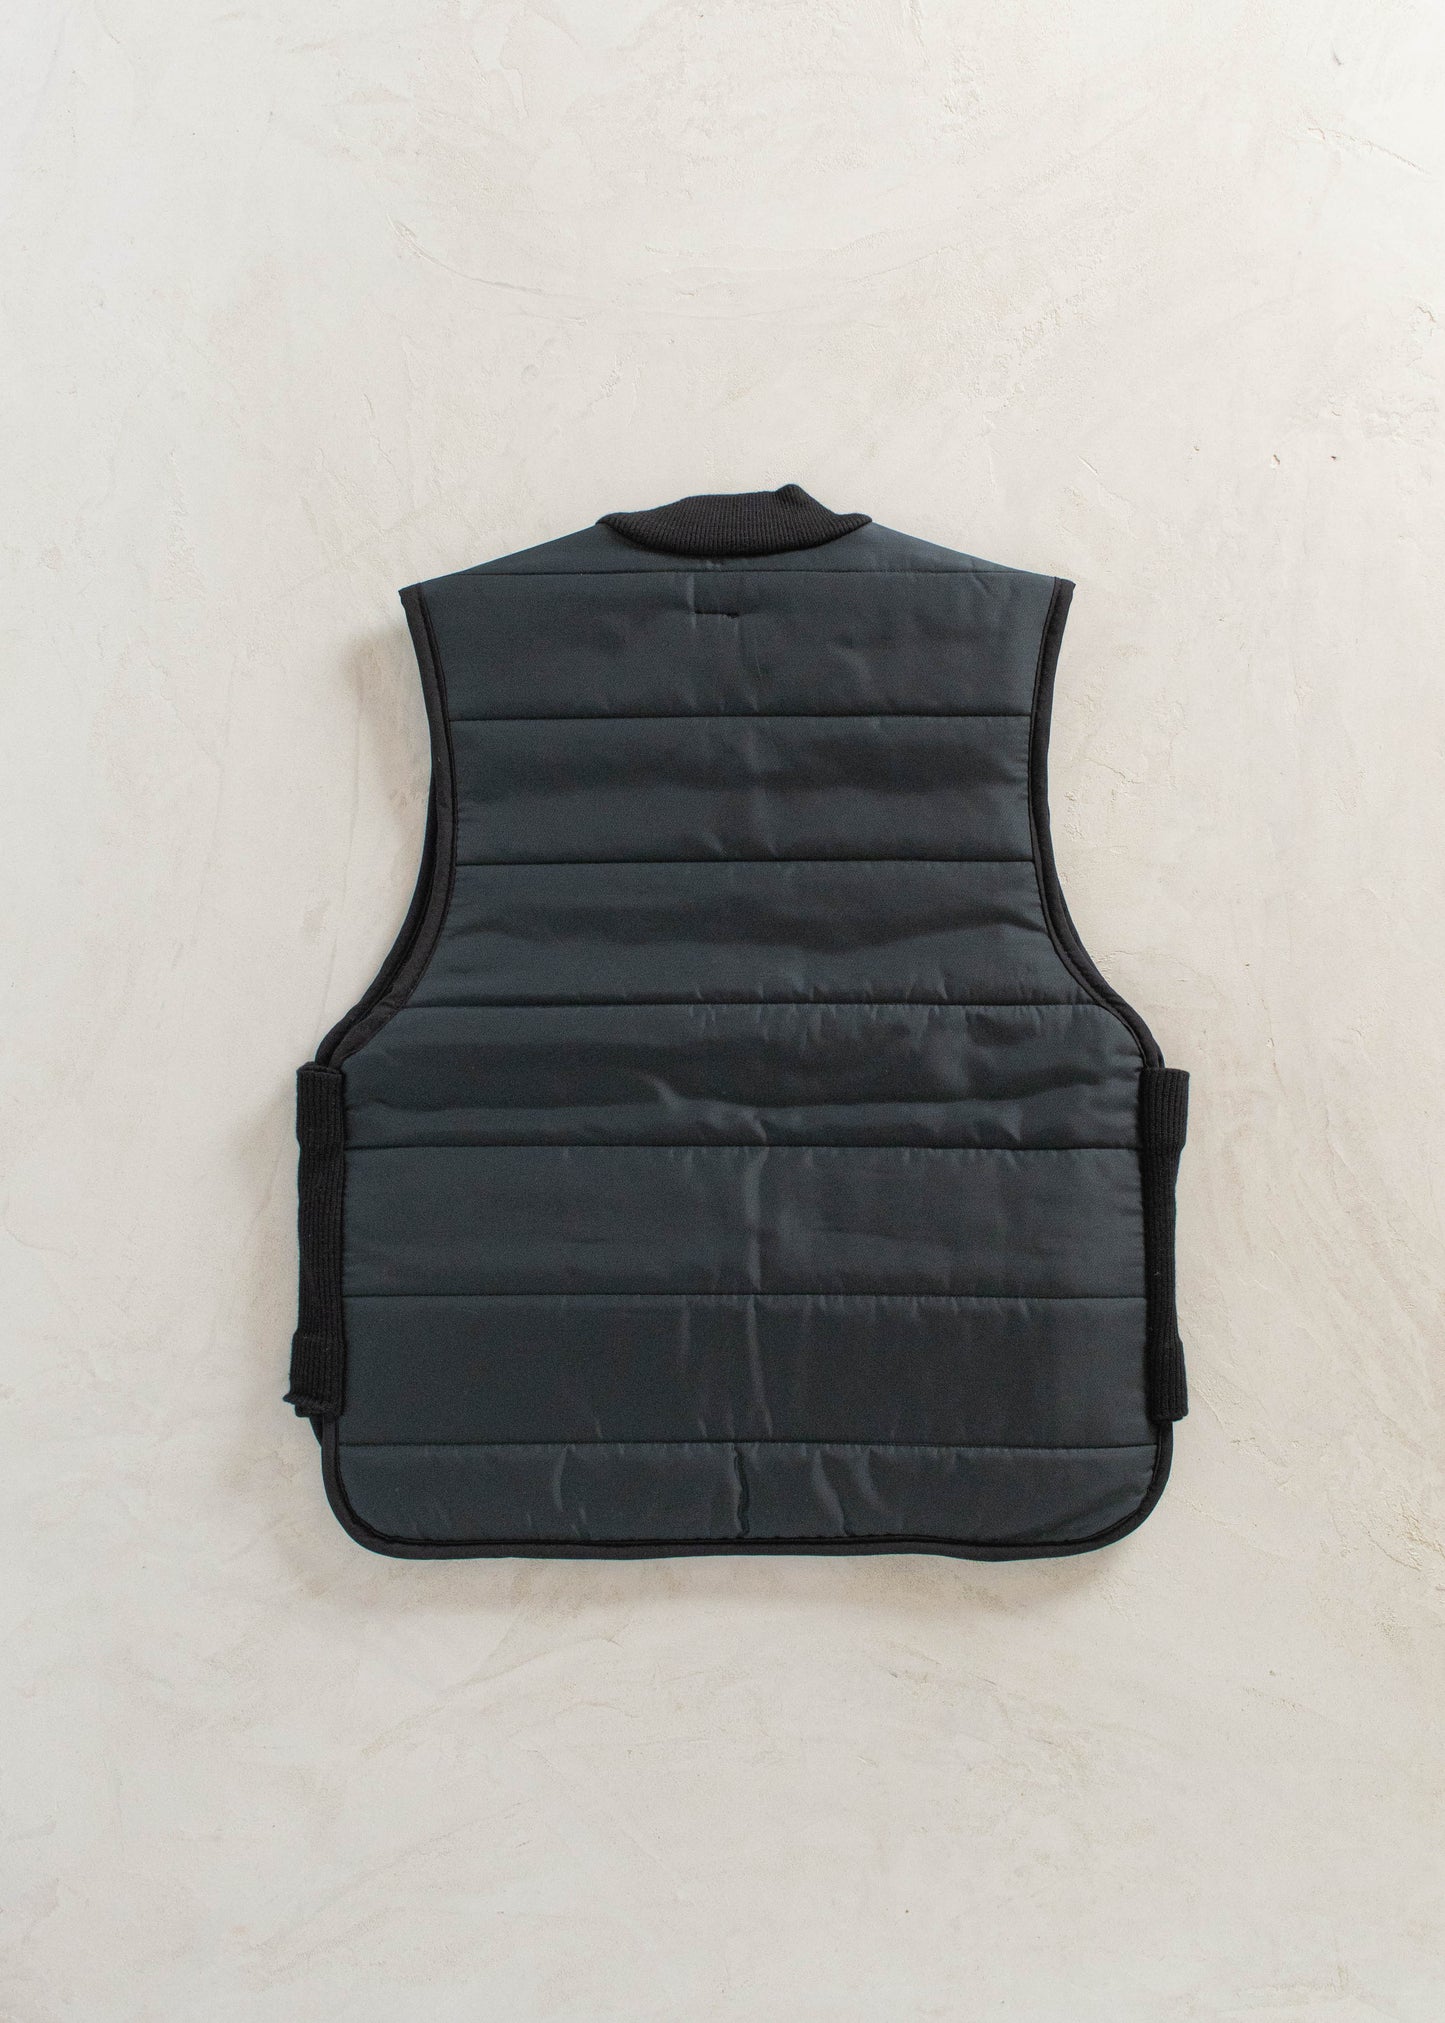 1980s Deadstock Workwear Nylon Vest Size M/L